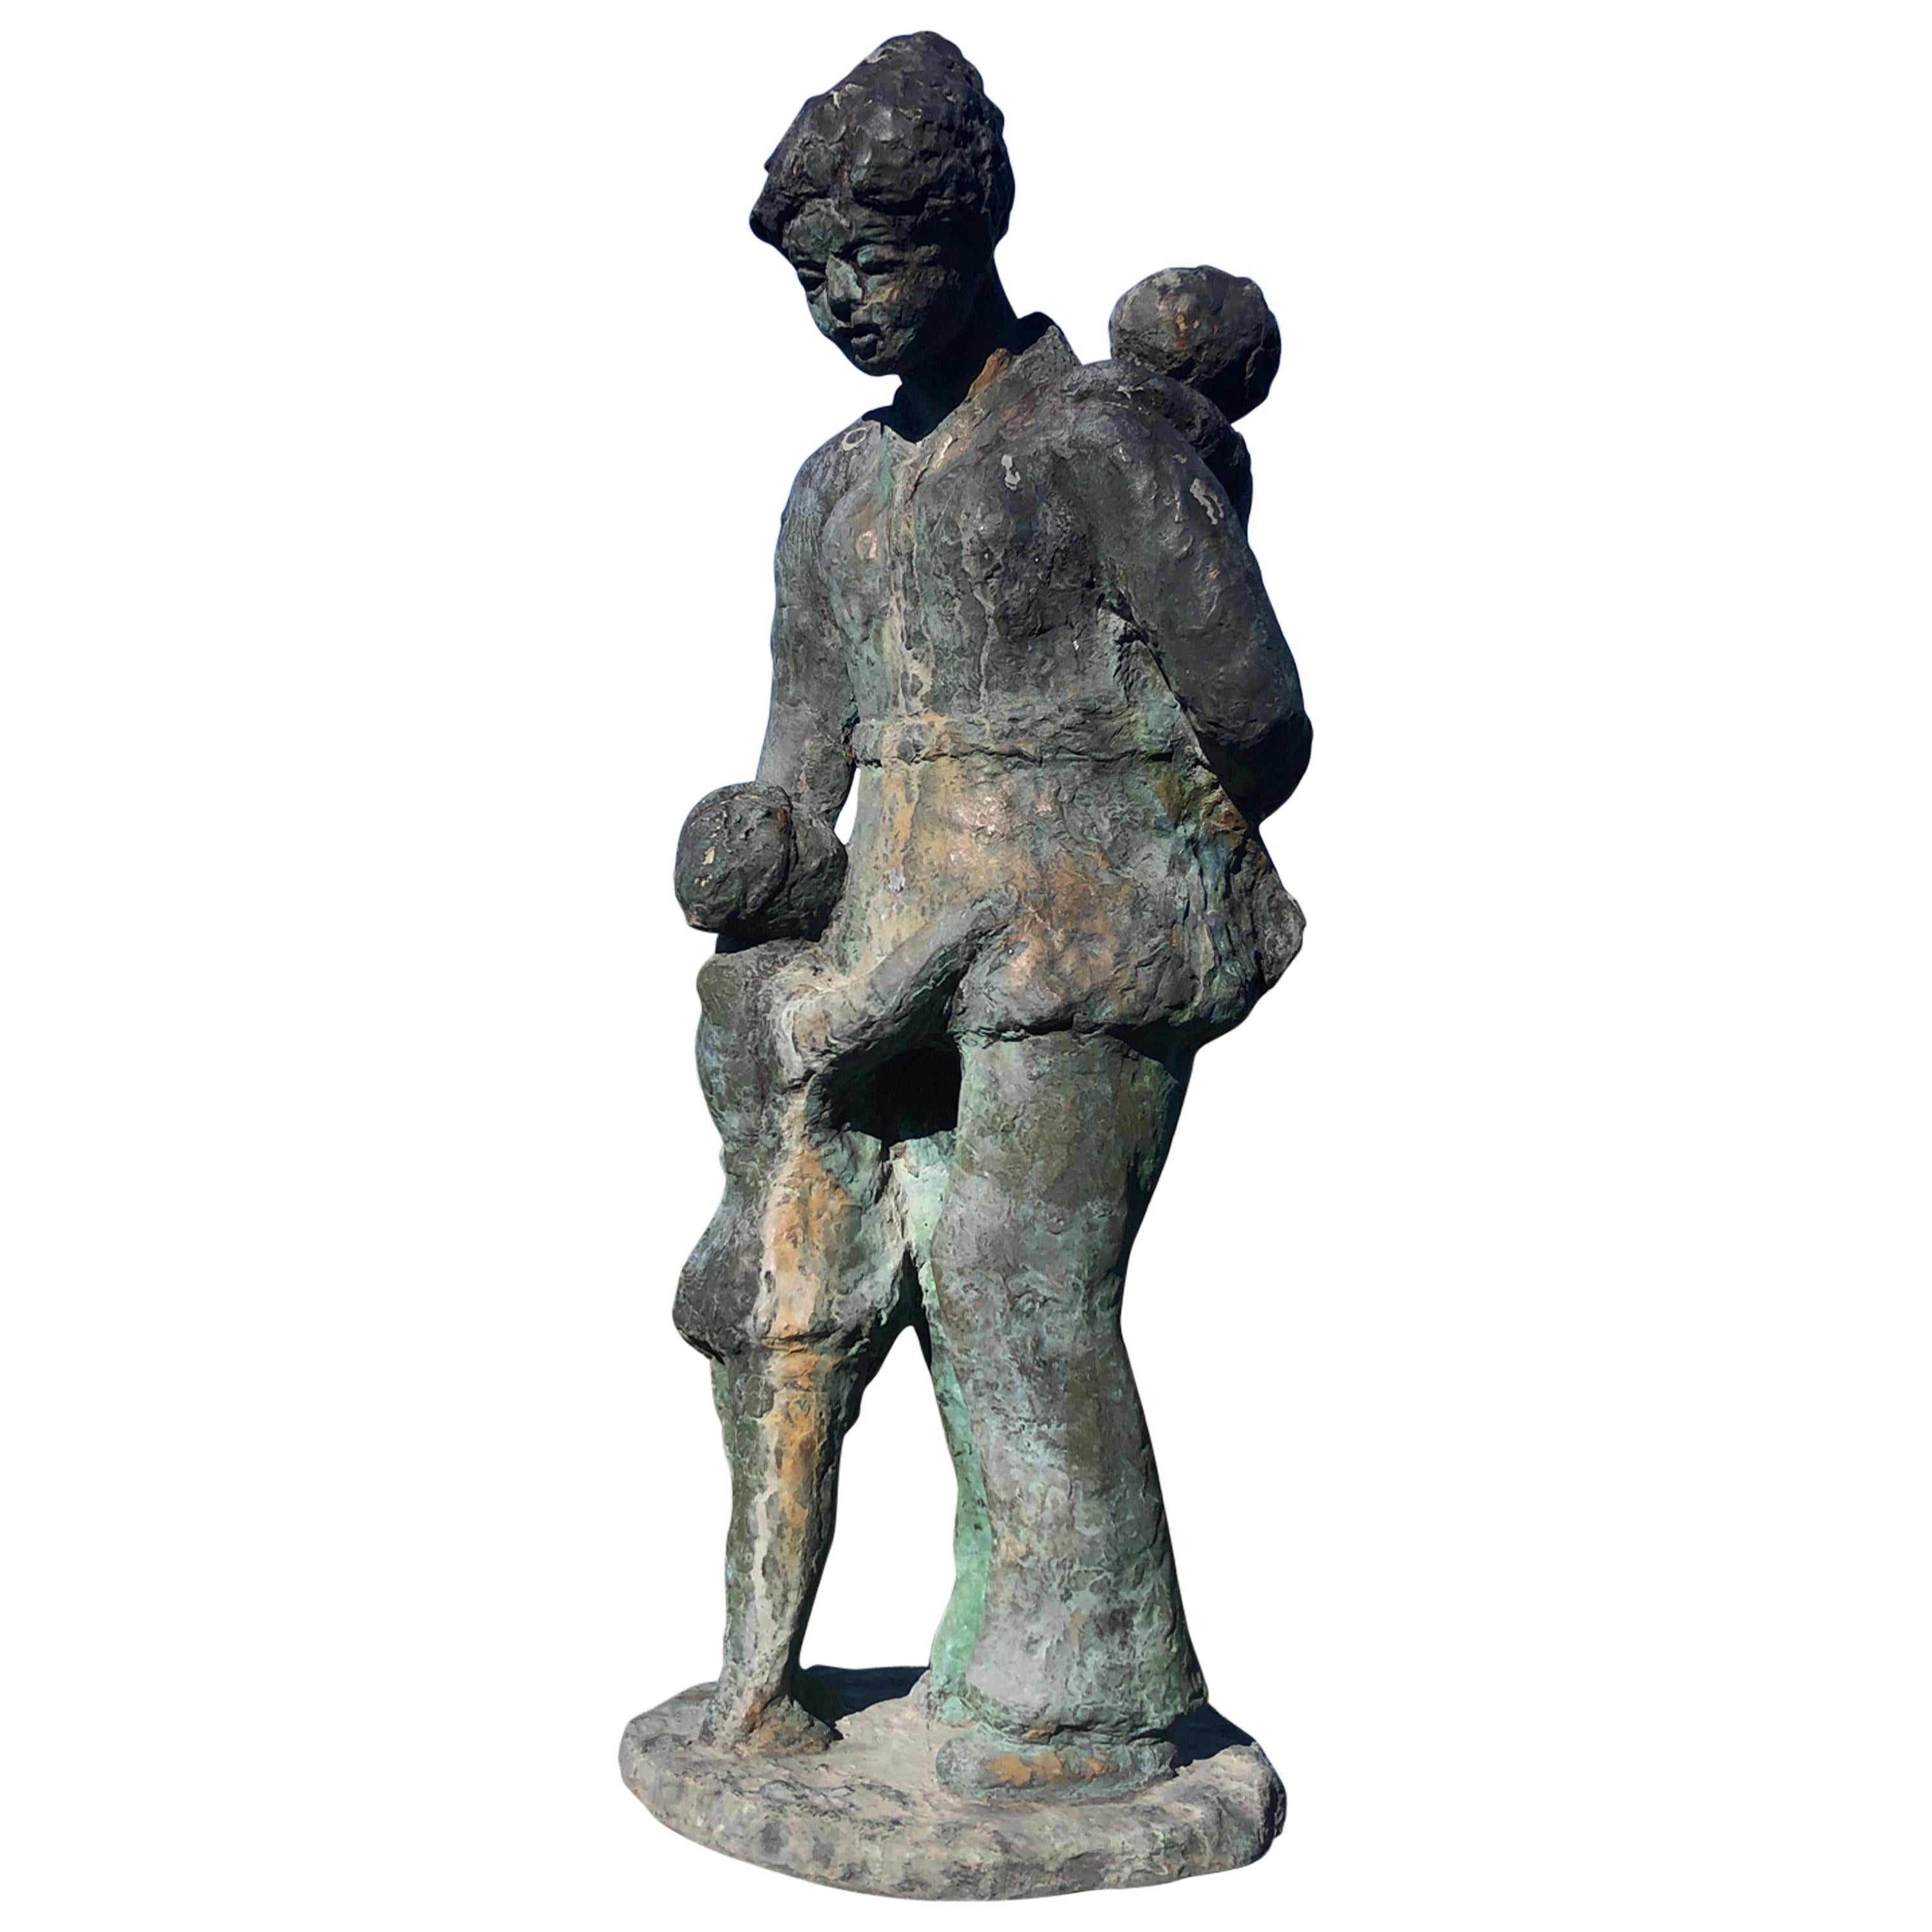 Japanese Bronze Midcentury Sculpture "Mother and Children” Kiku For Sale